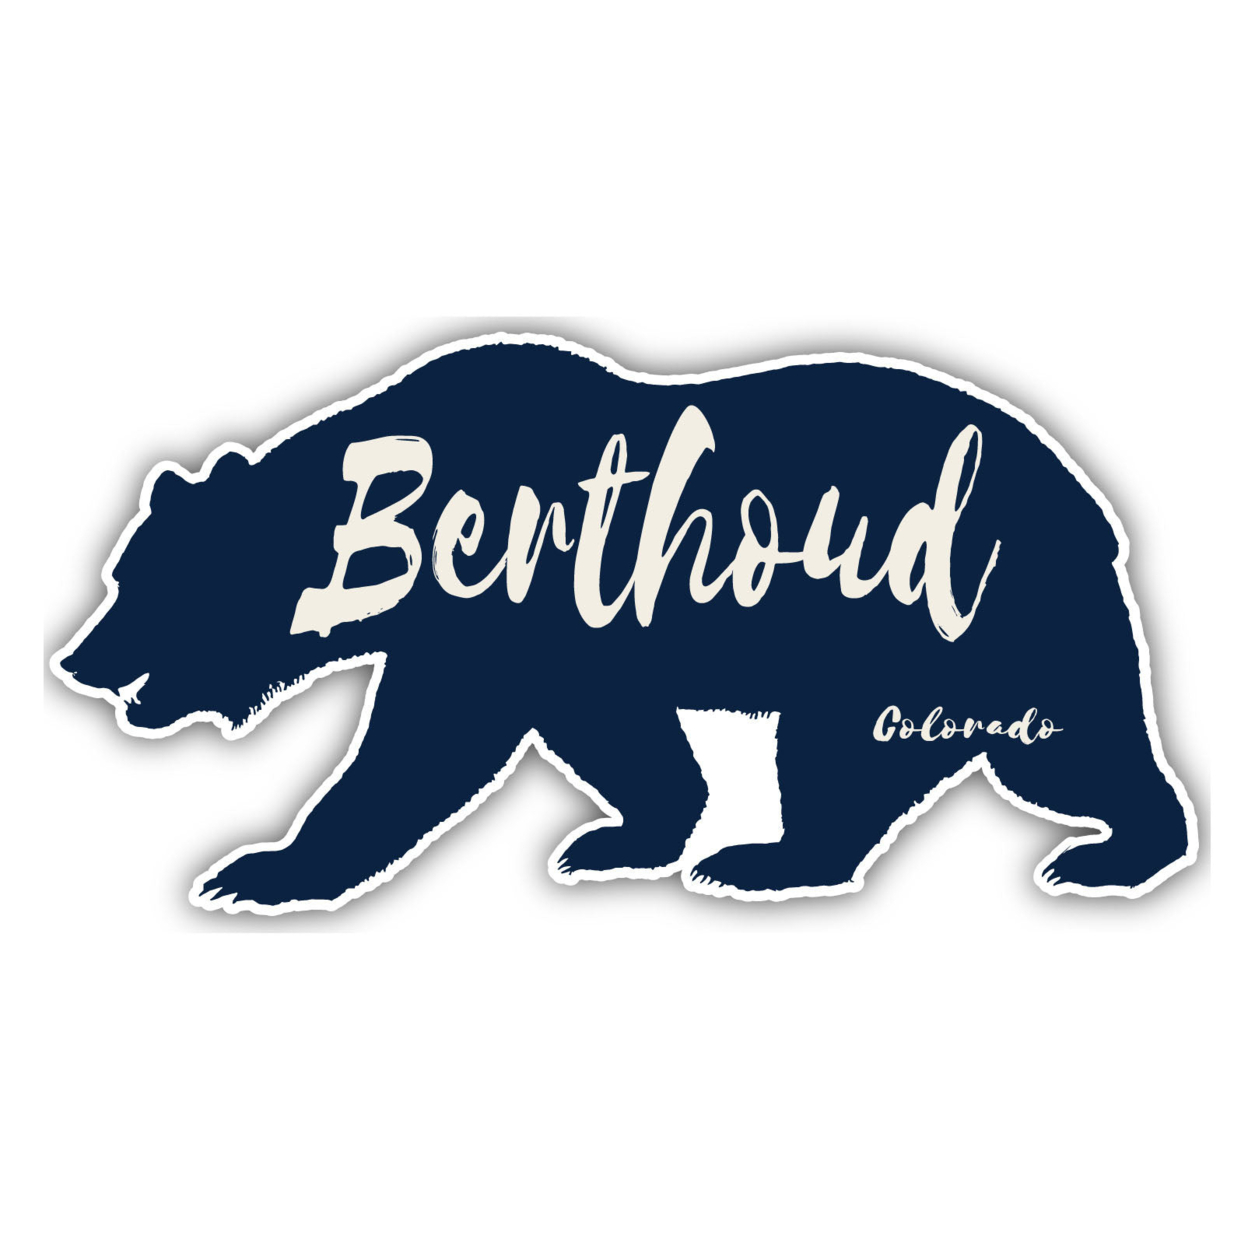 Berthoud Colorado Souvenir Decorative Stickers (Choose Theme And Size) - Single Unit, 4-Inch, Bear